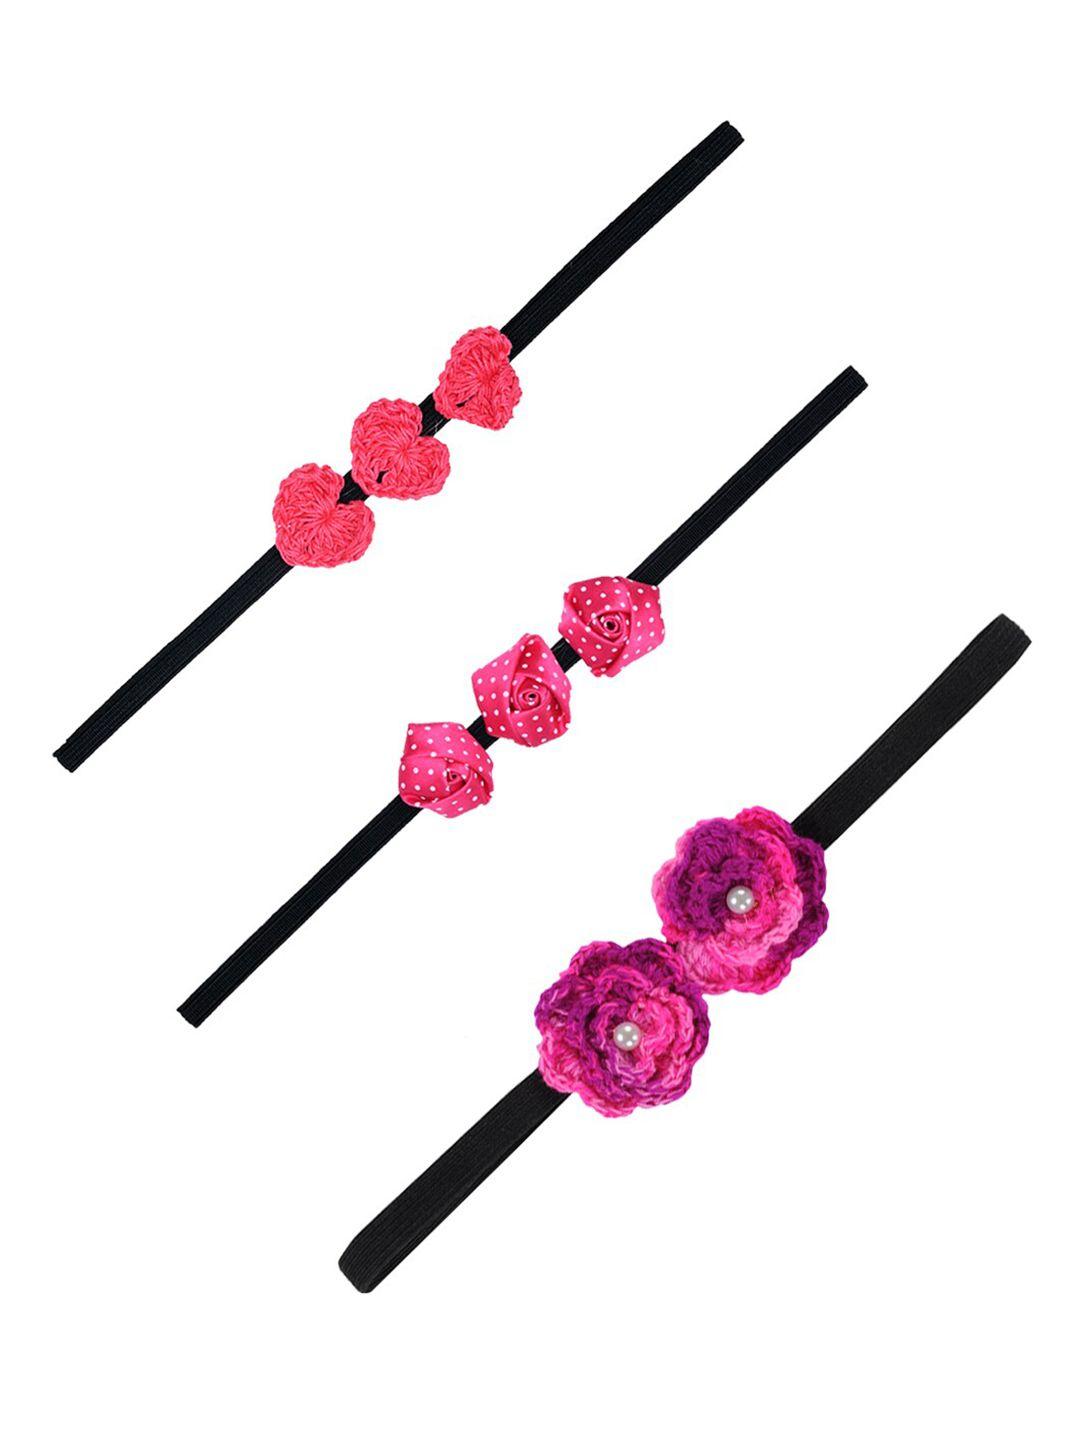 funkrafts-girls-black-&-pink-set-of-3-hair-accessory-bands